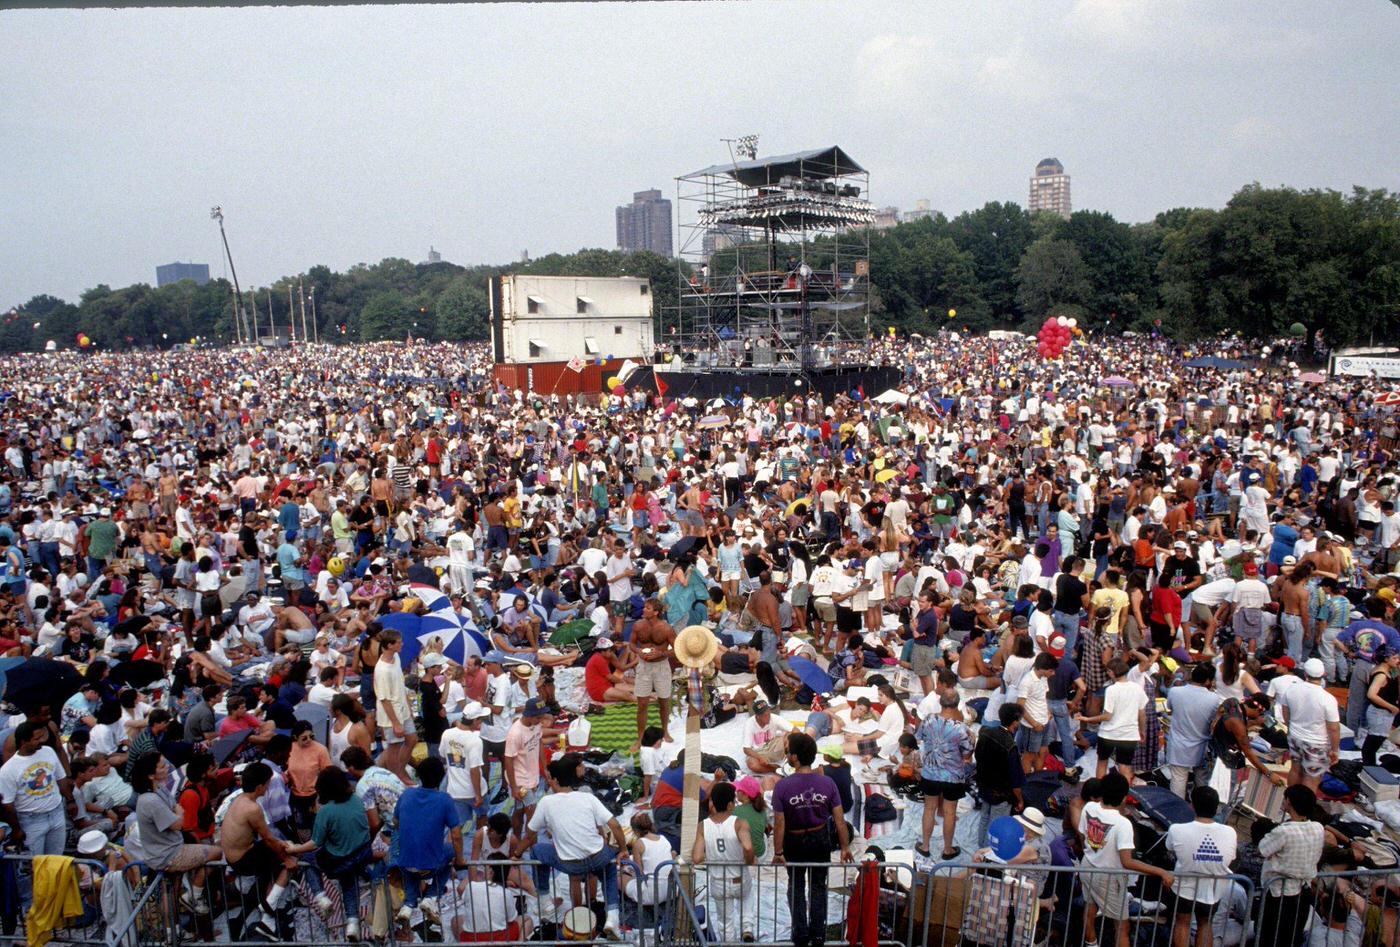 Appreciative Crowd At Paul Simon'S Concert In Central Park, Manhattan, 1991